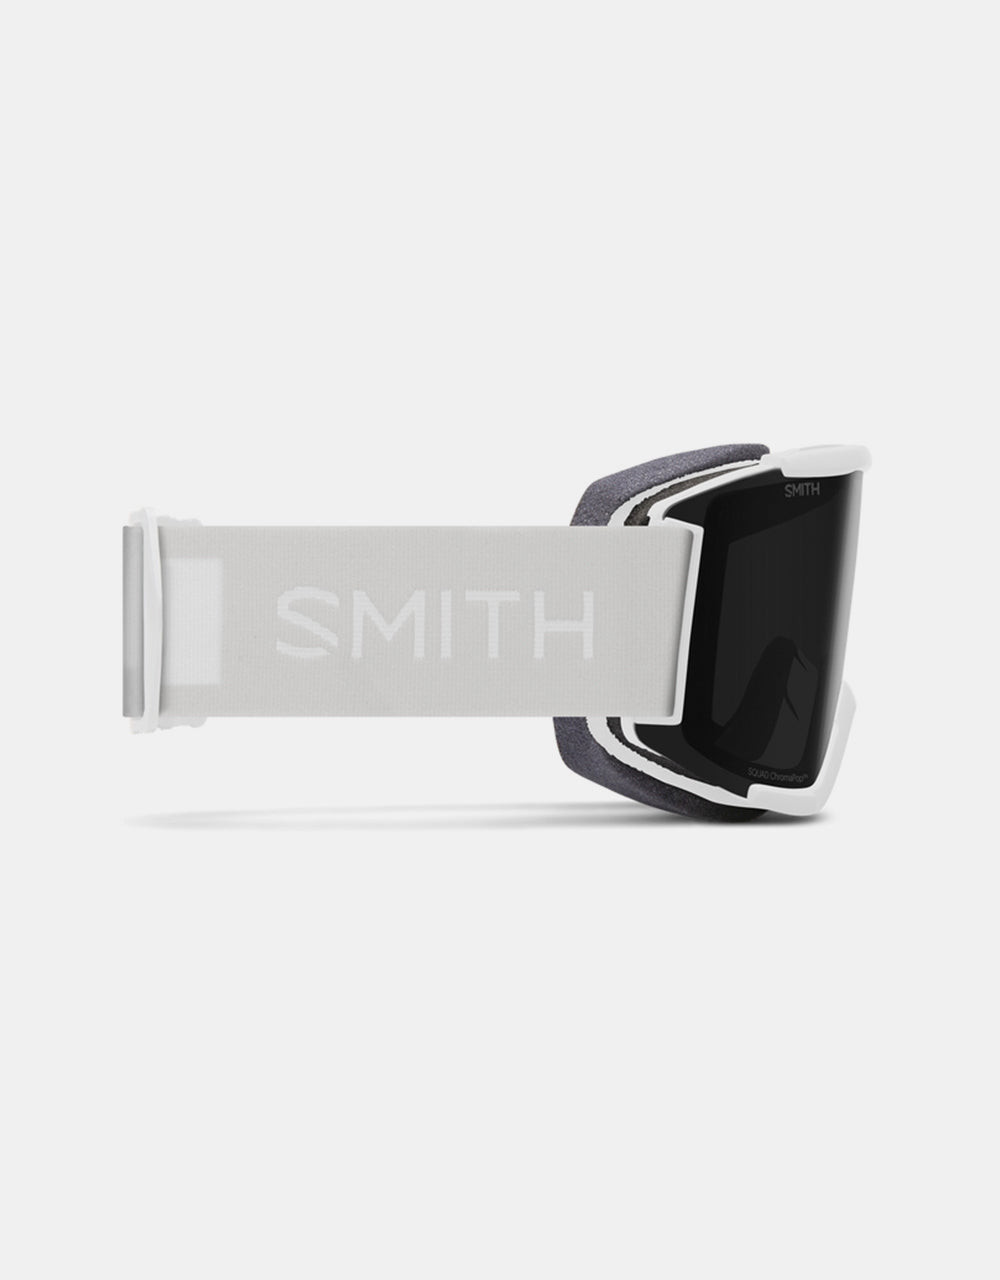 Smith Squad Snowboard Goggles - White Vapor/ChromaPop™ Sun Black